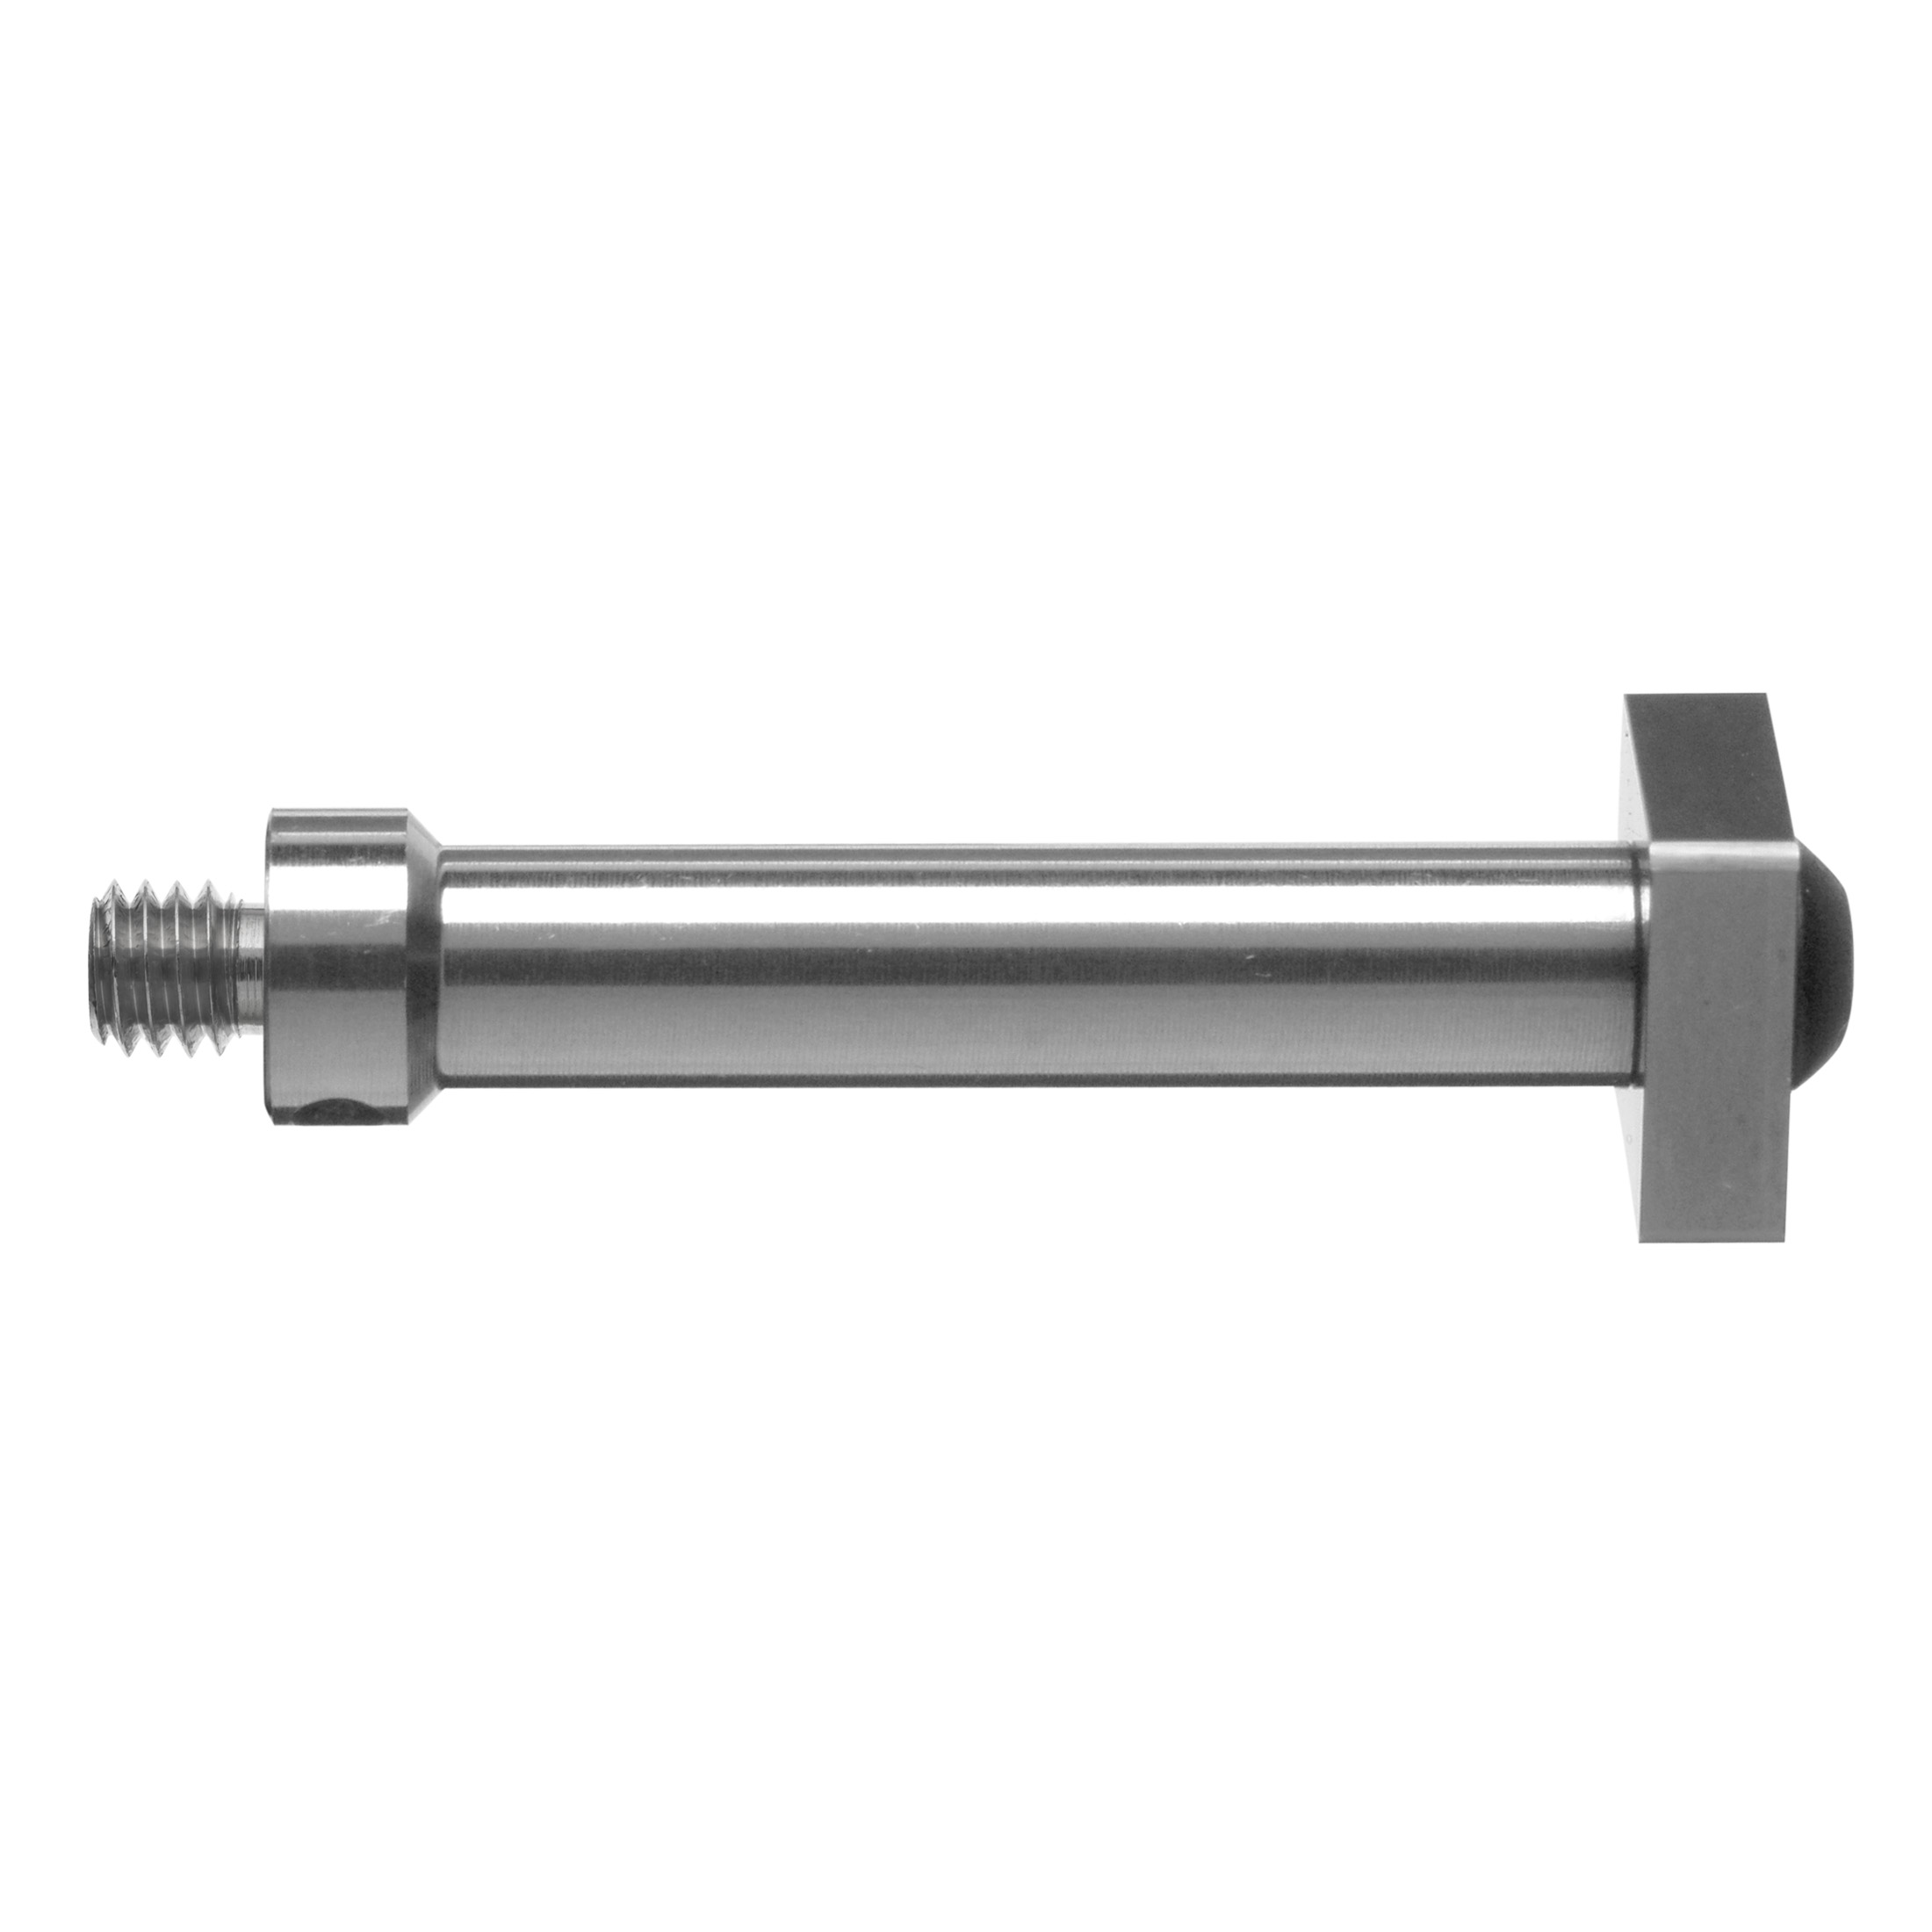 Renishaw, M4 tool datum block, tungsten carbide, L 32.5 mm, A-5000-6403